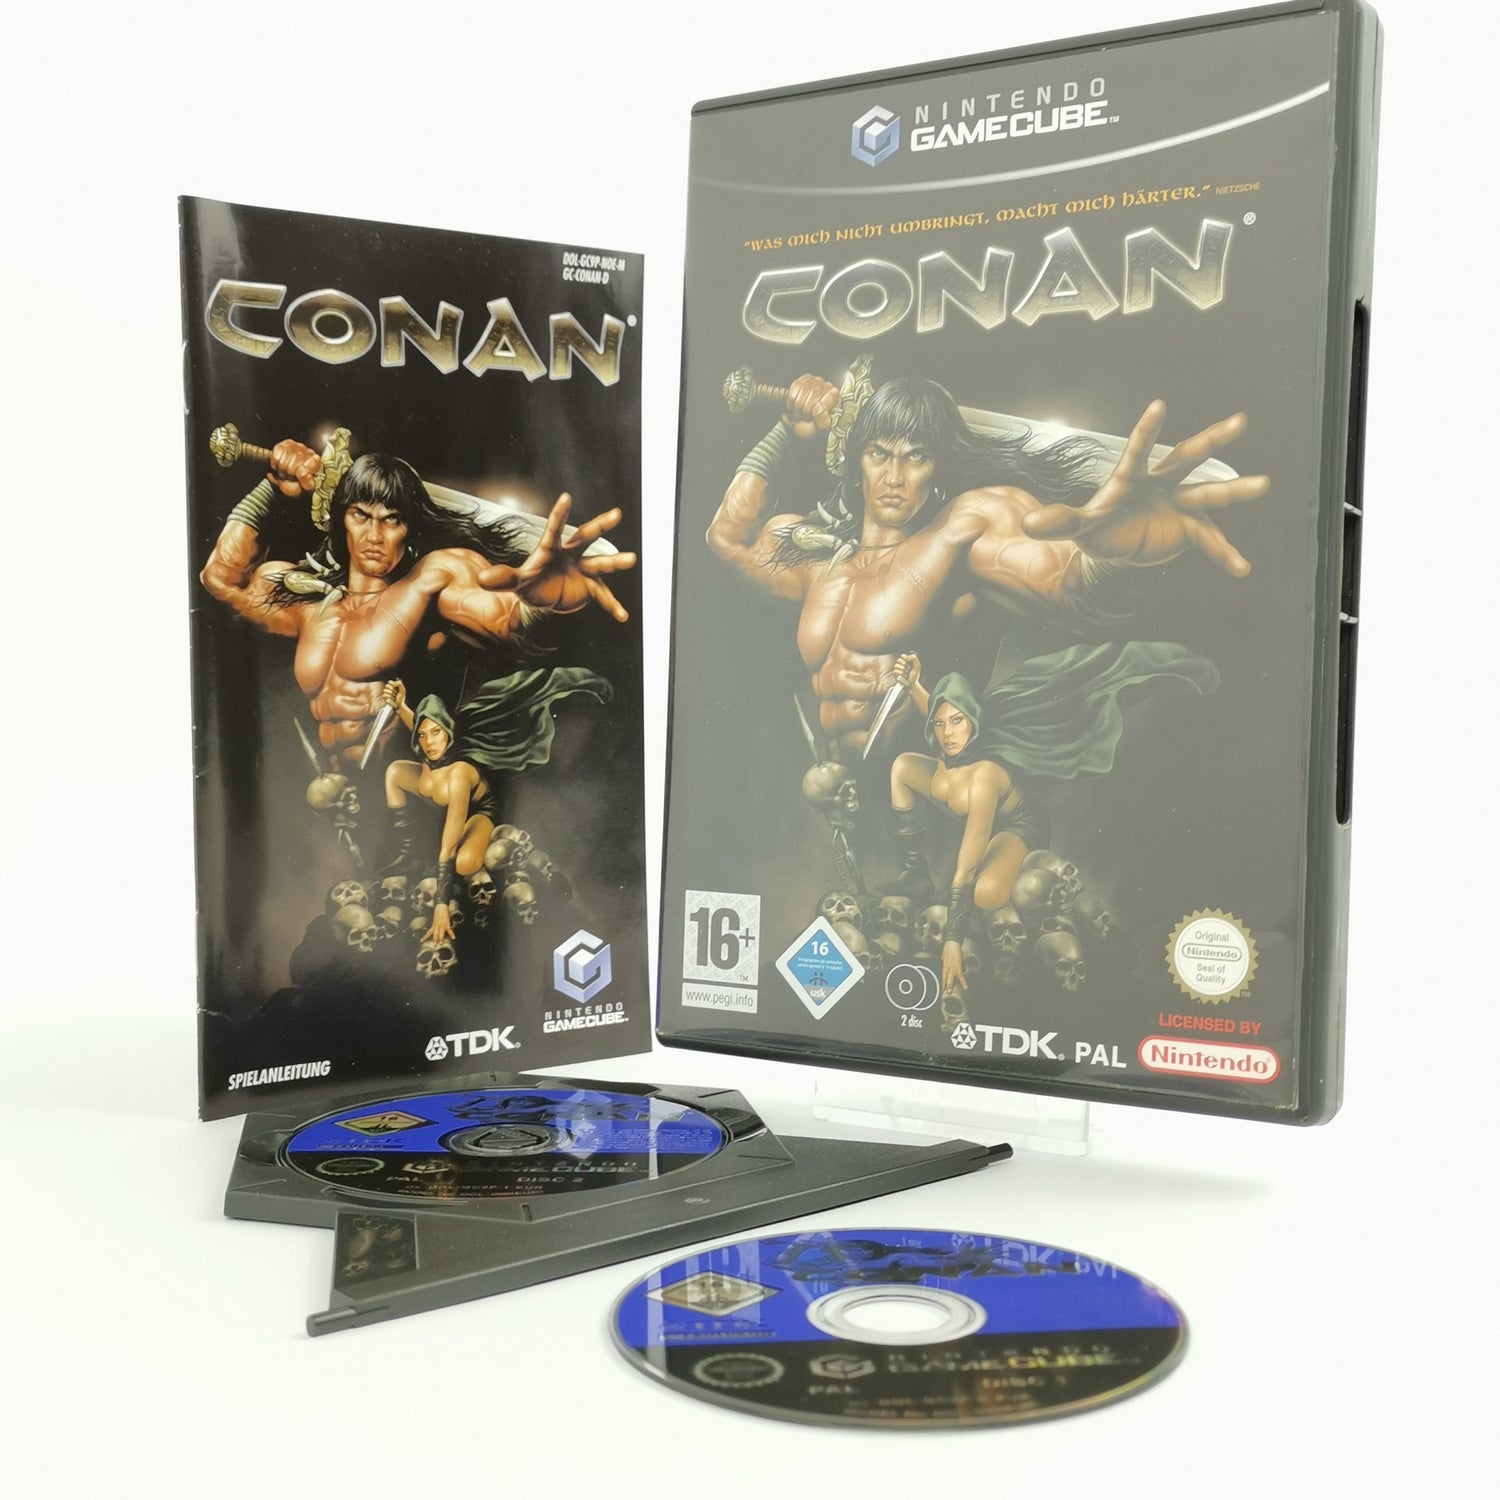 Nintendo Gamecube Game: Conan - TDK | Original packaging - German PAL version